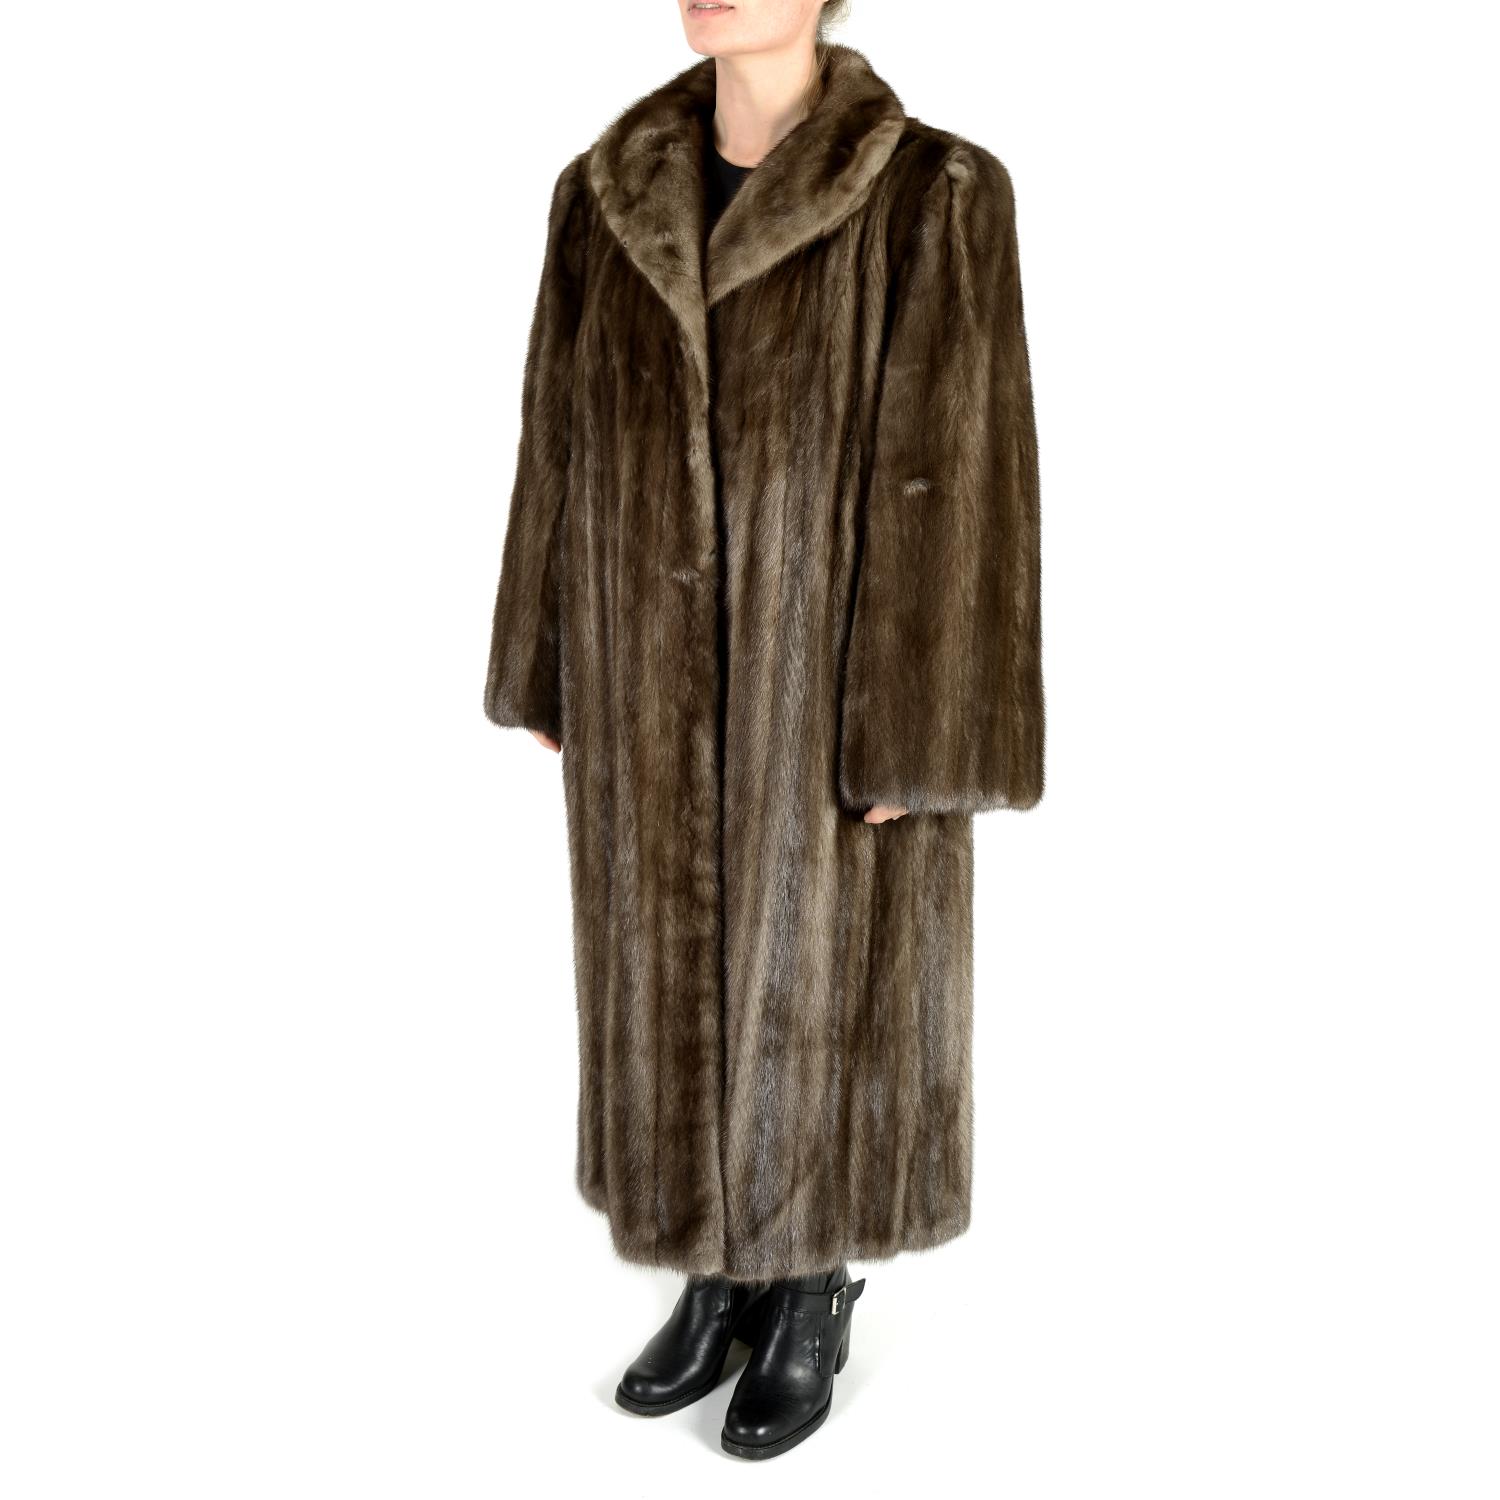 A rare full-length Lutetia mink coat.